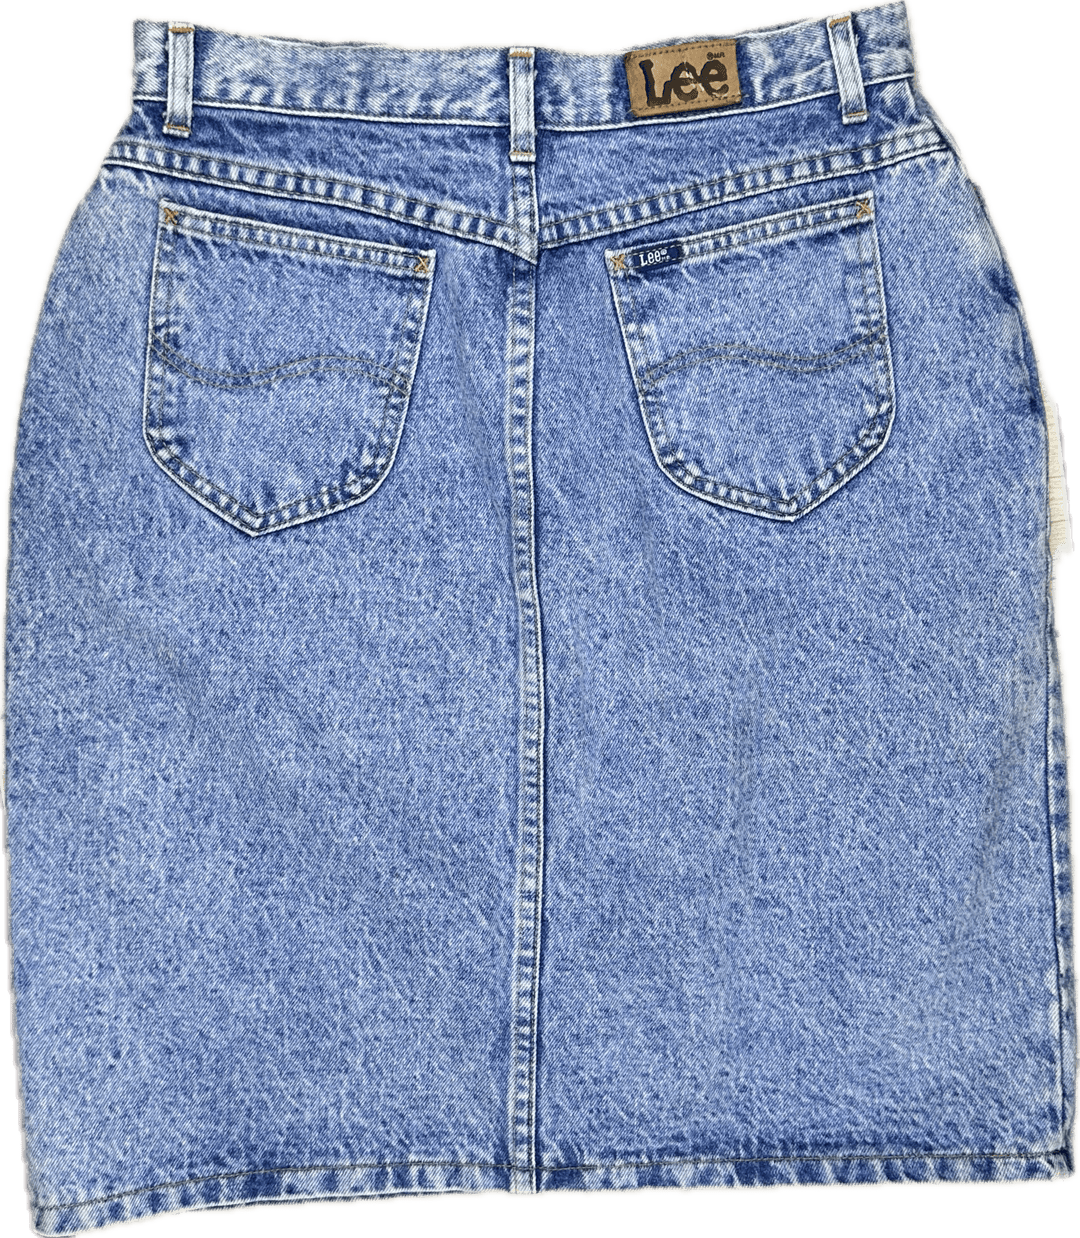 Lee Jeans Vintage 1980's Denim Skirt - Size 12/13 - Jean Pool